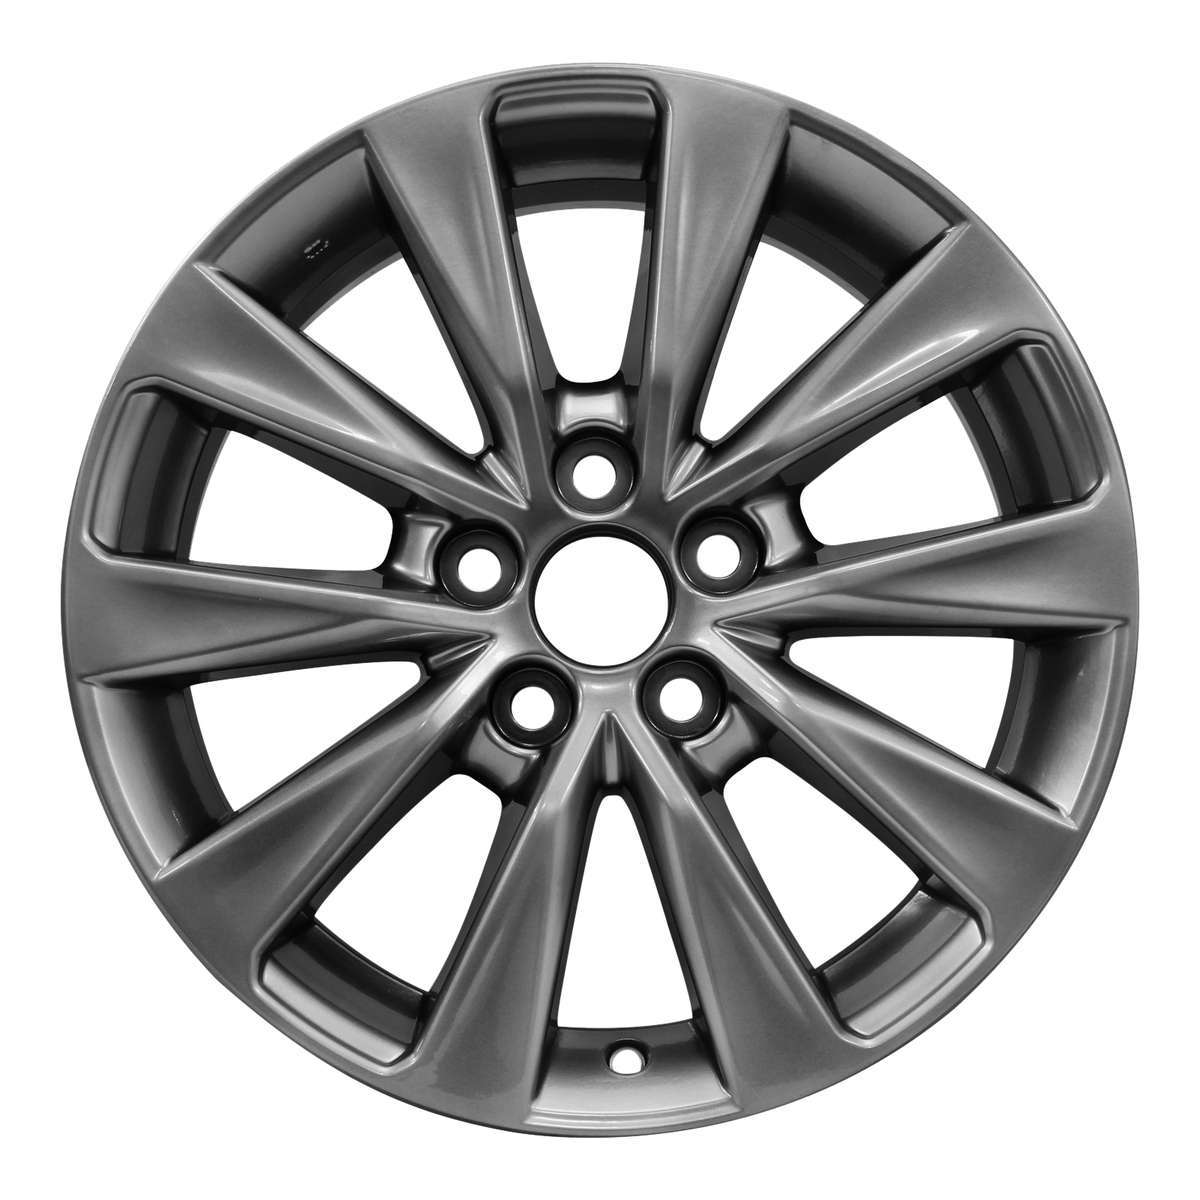 2015 Toyota Camry 17" OEM Wheel Rim W75170DH